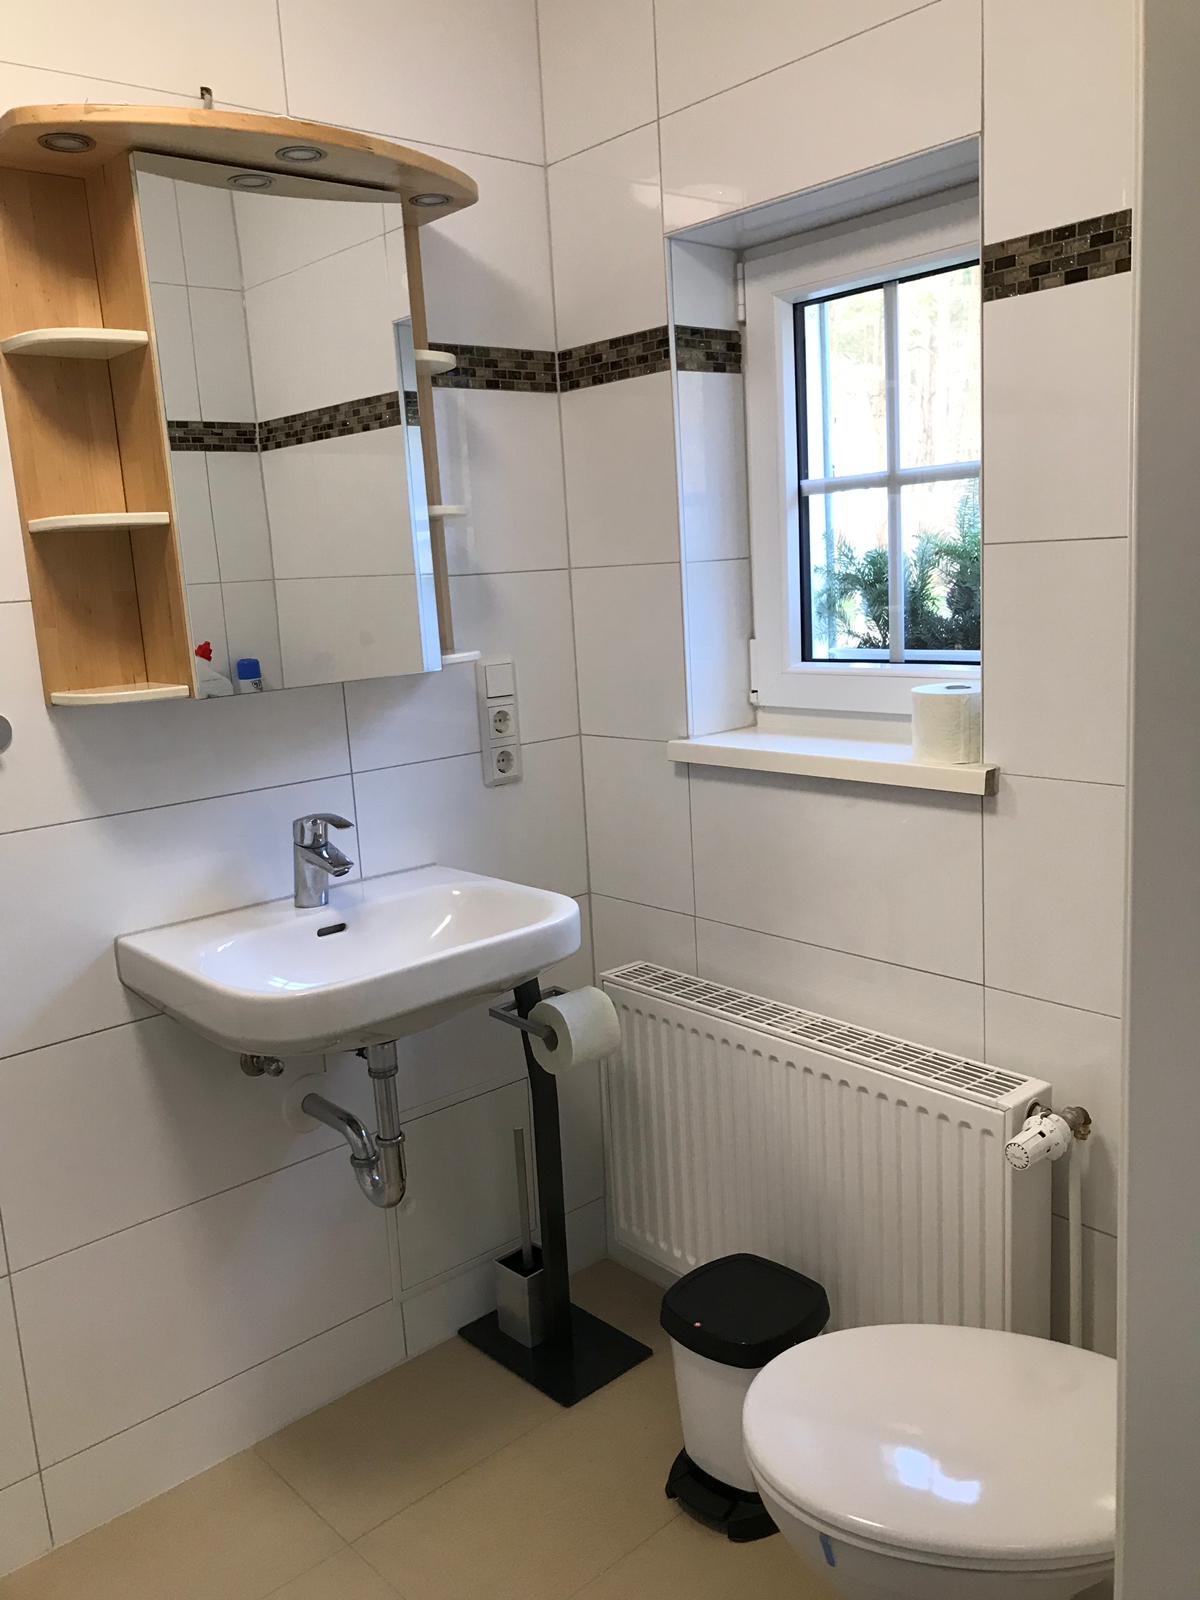 WC / Dusche 1 Etage